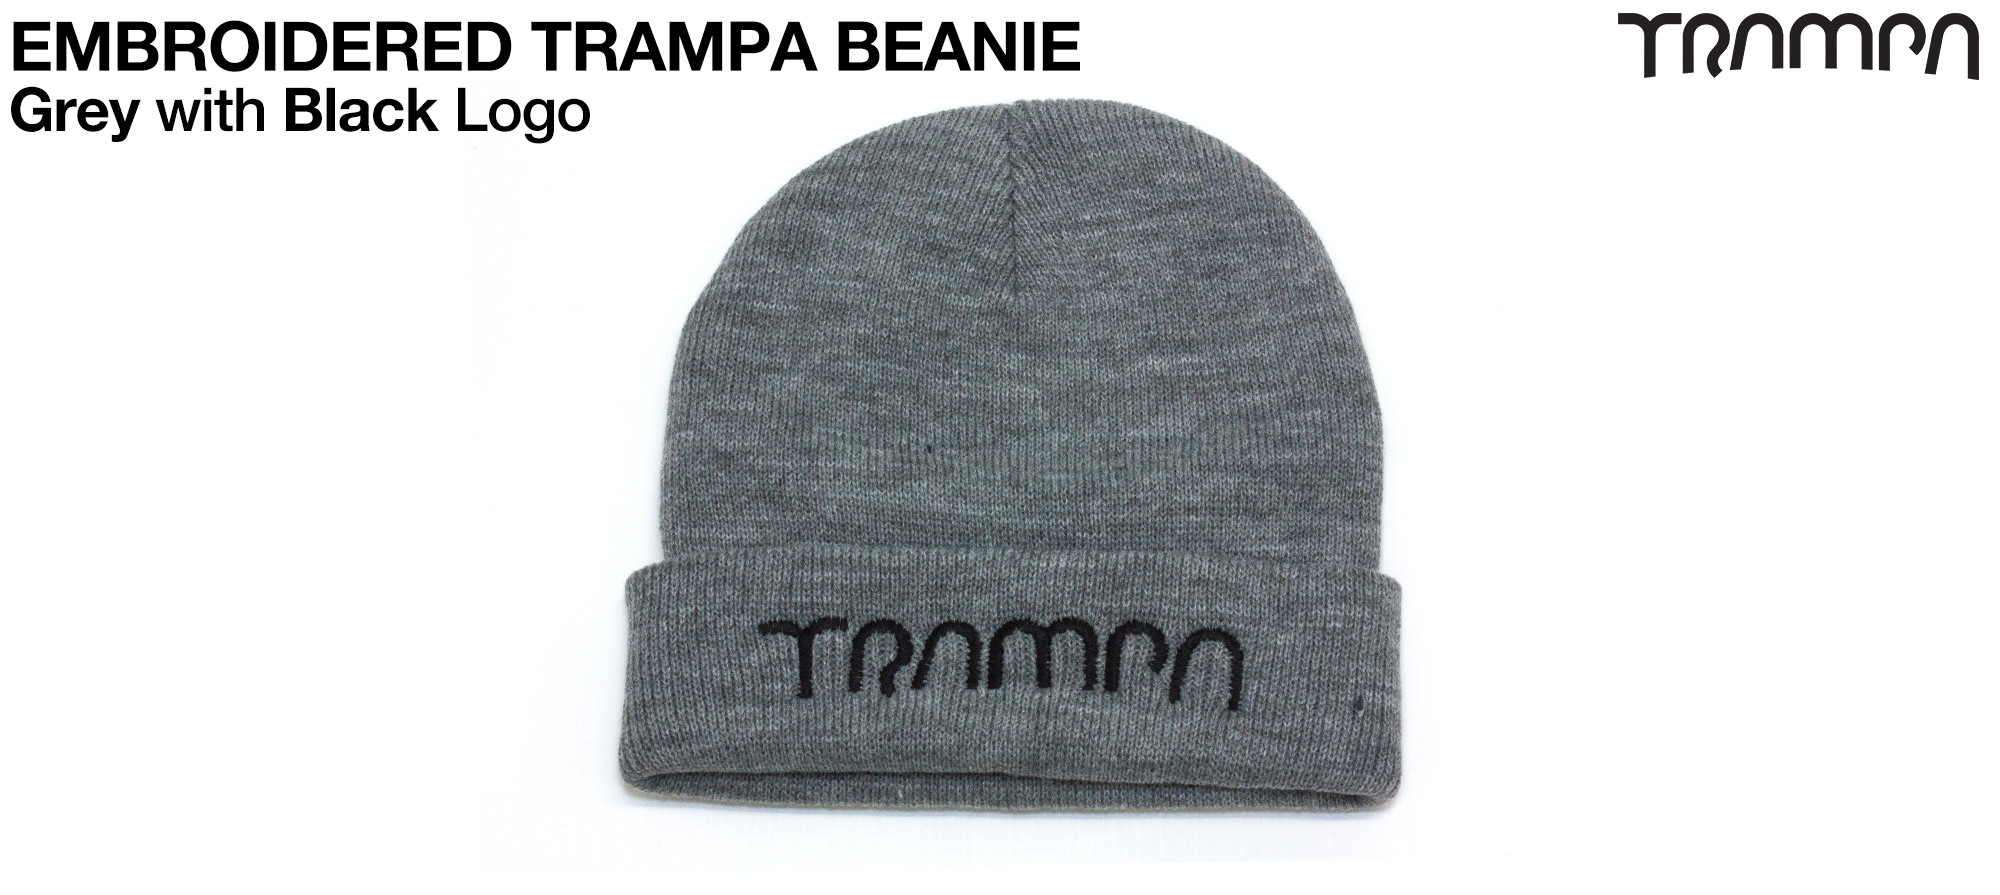 Marl GREY Beanie with Black TRAMPA logo